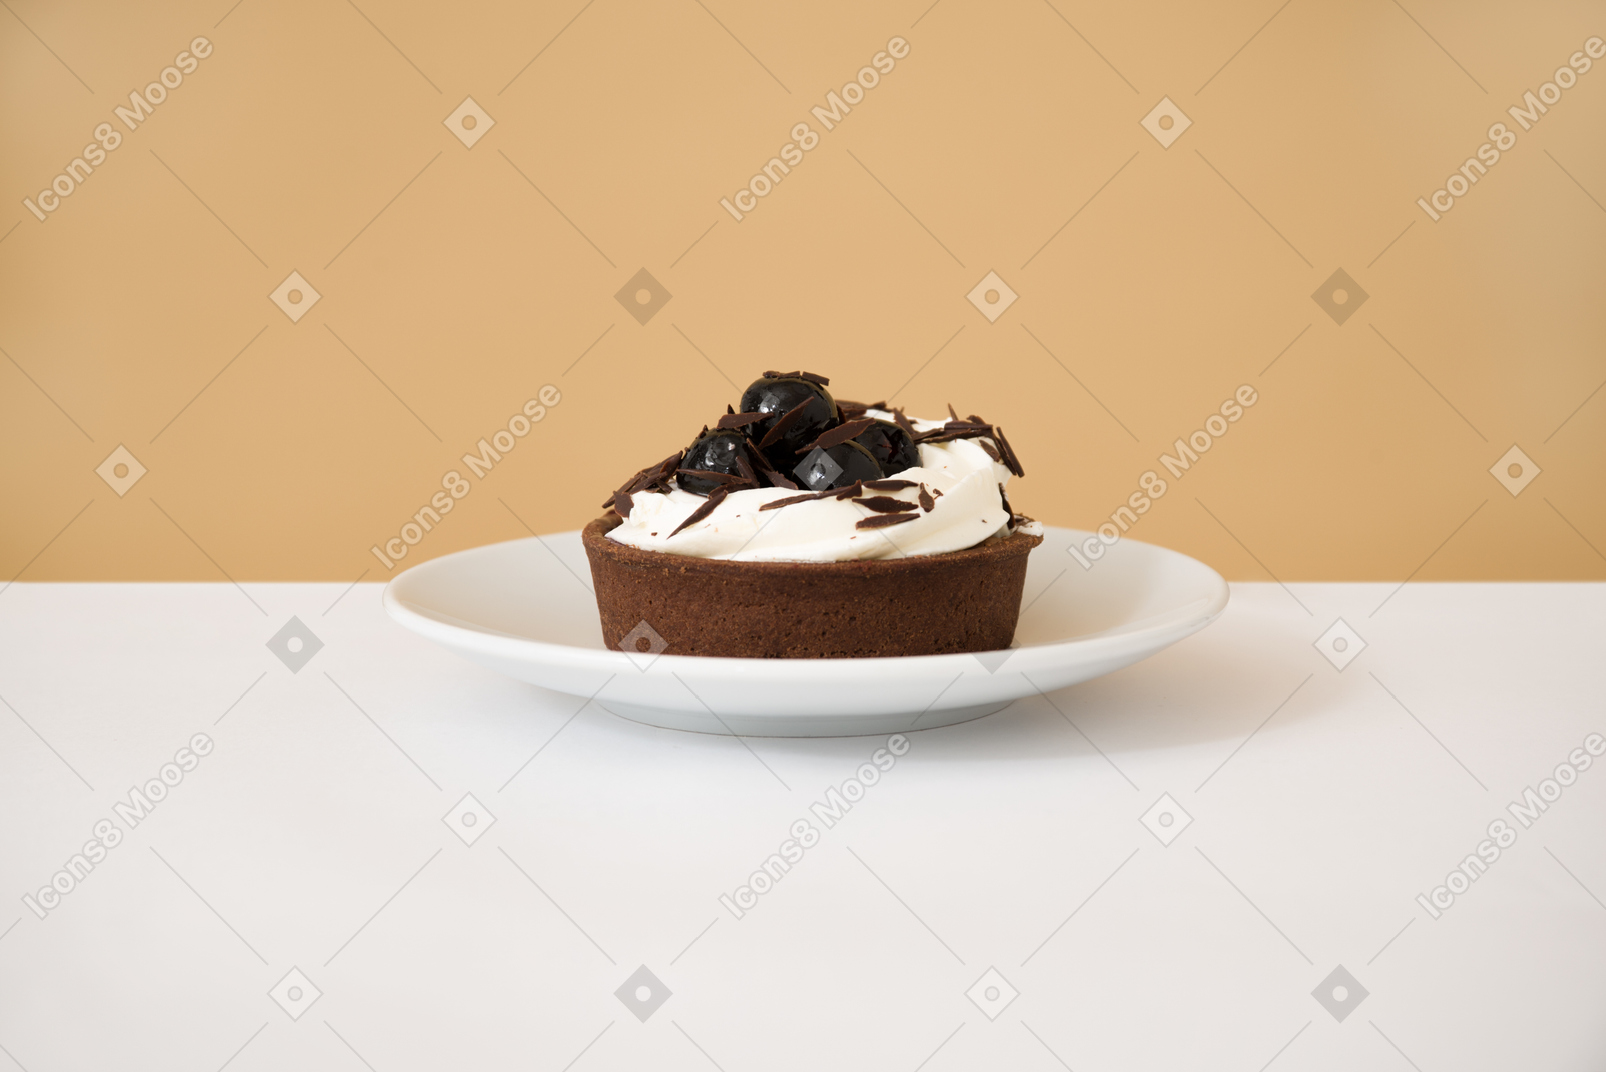 Gâteau aux baies au chocolat